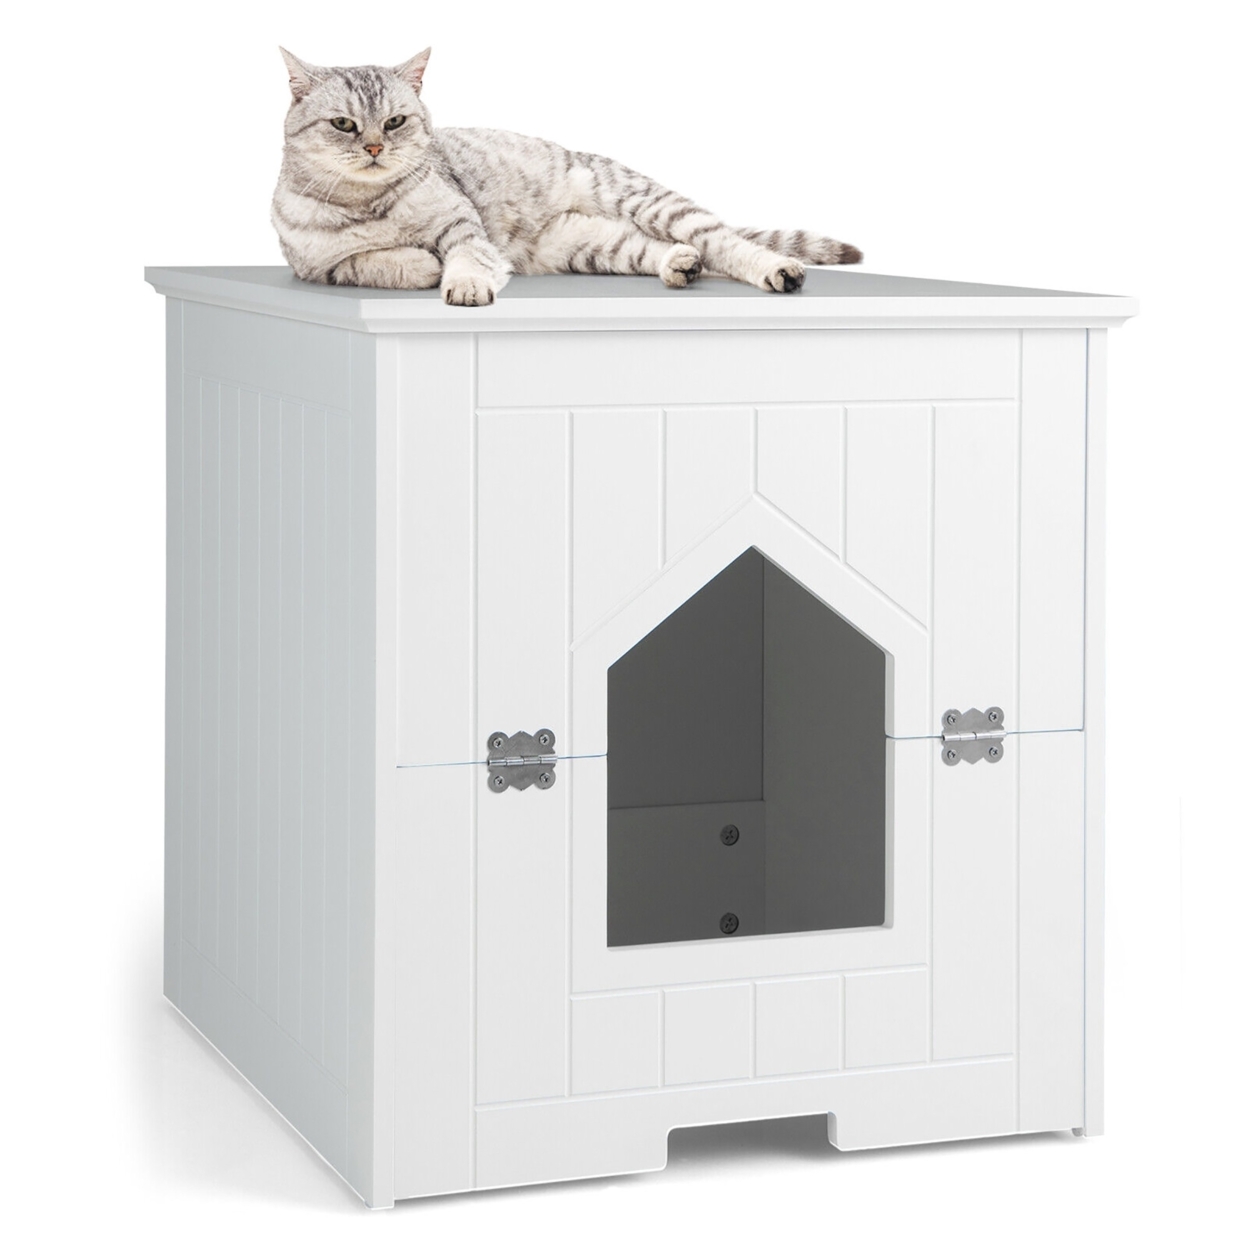 Cat Litter Box Enclosure W/ Flip Magnetic Half Door Hidden Litter Box Enclosure - White